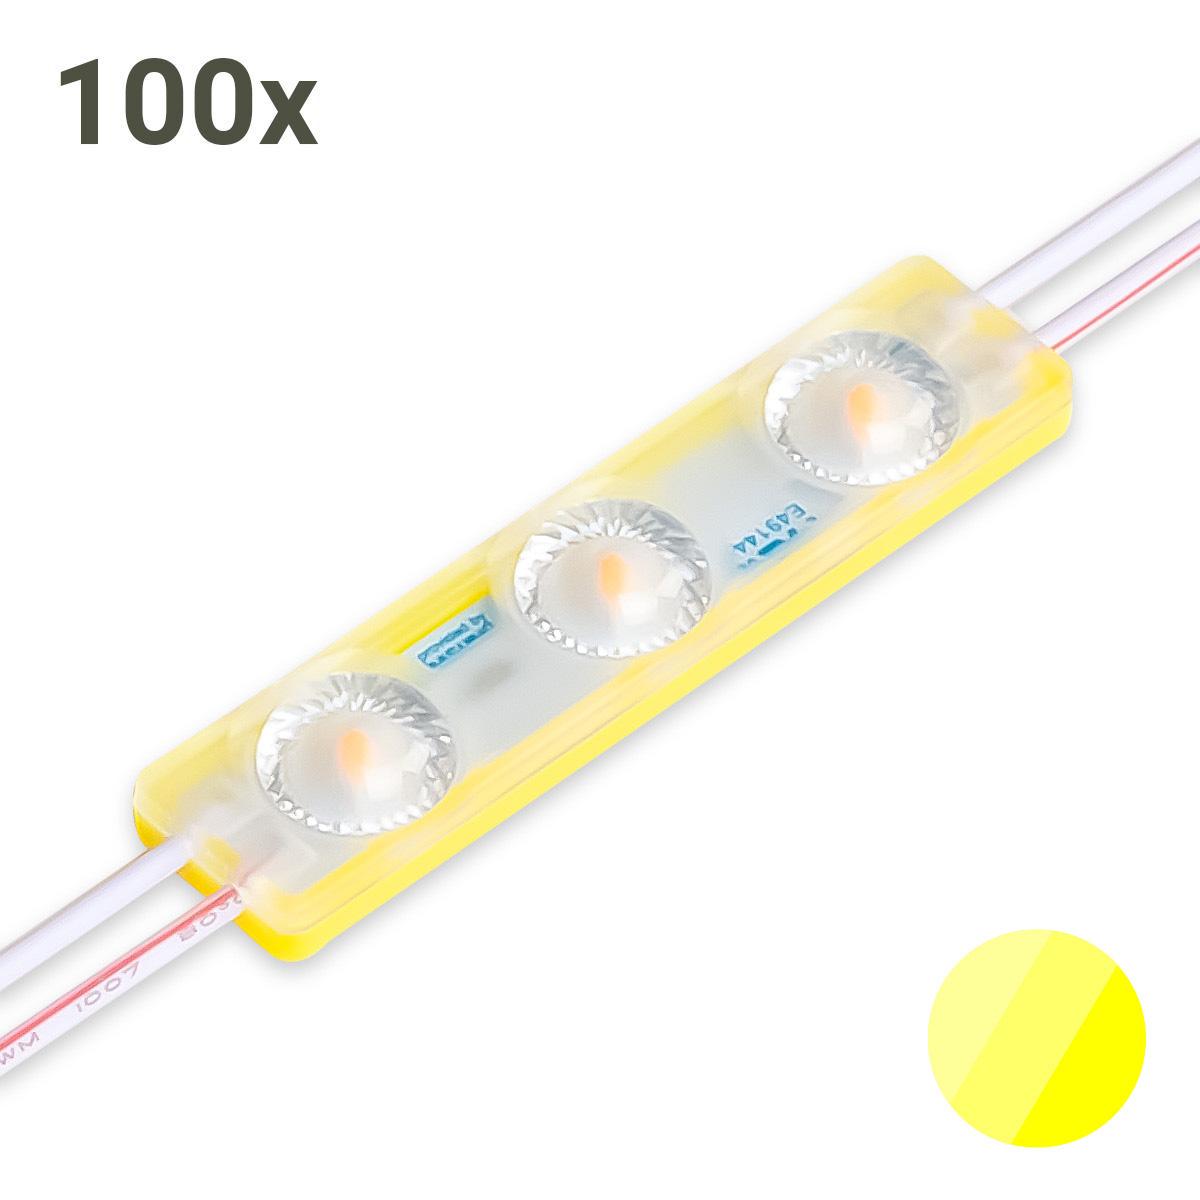 LED Modul gelb 1.5W 170° 12V IP65 (100 Stück VPE)